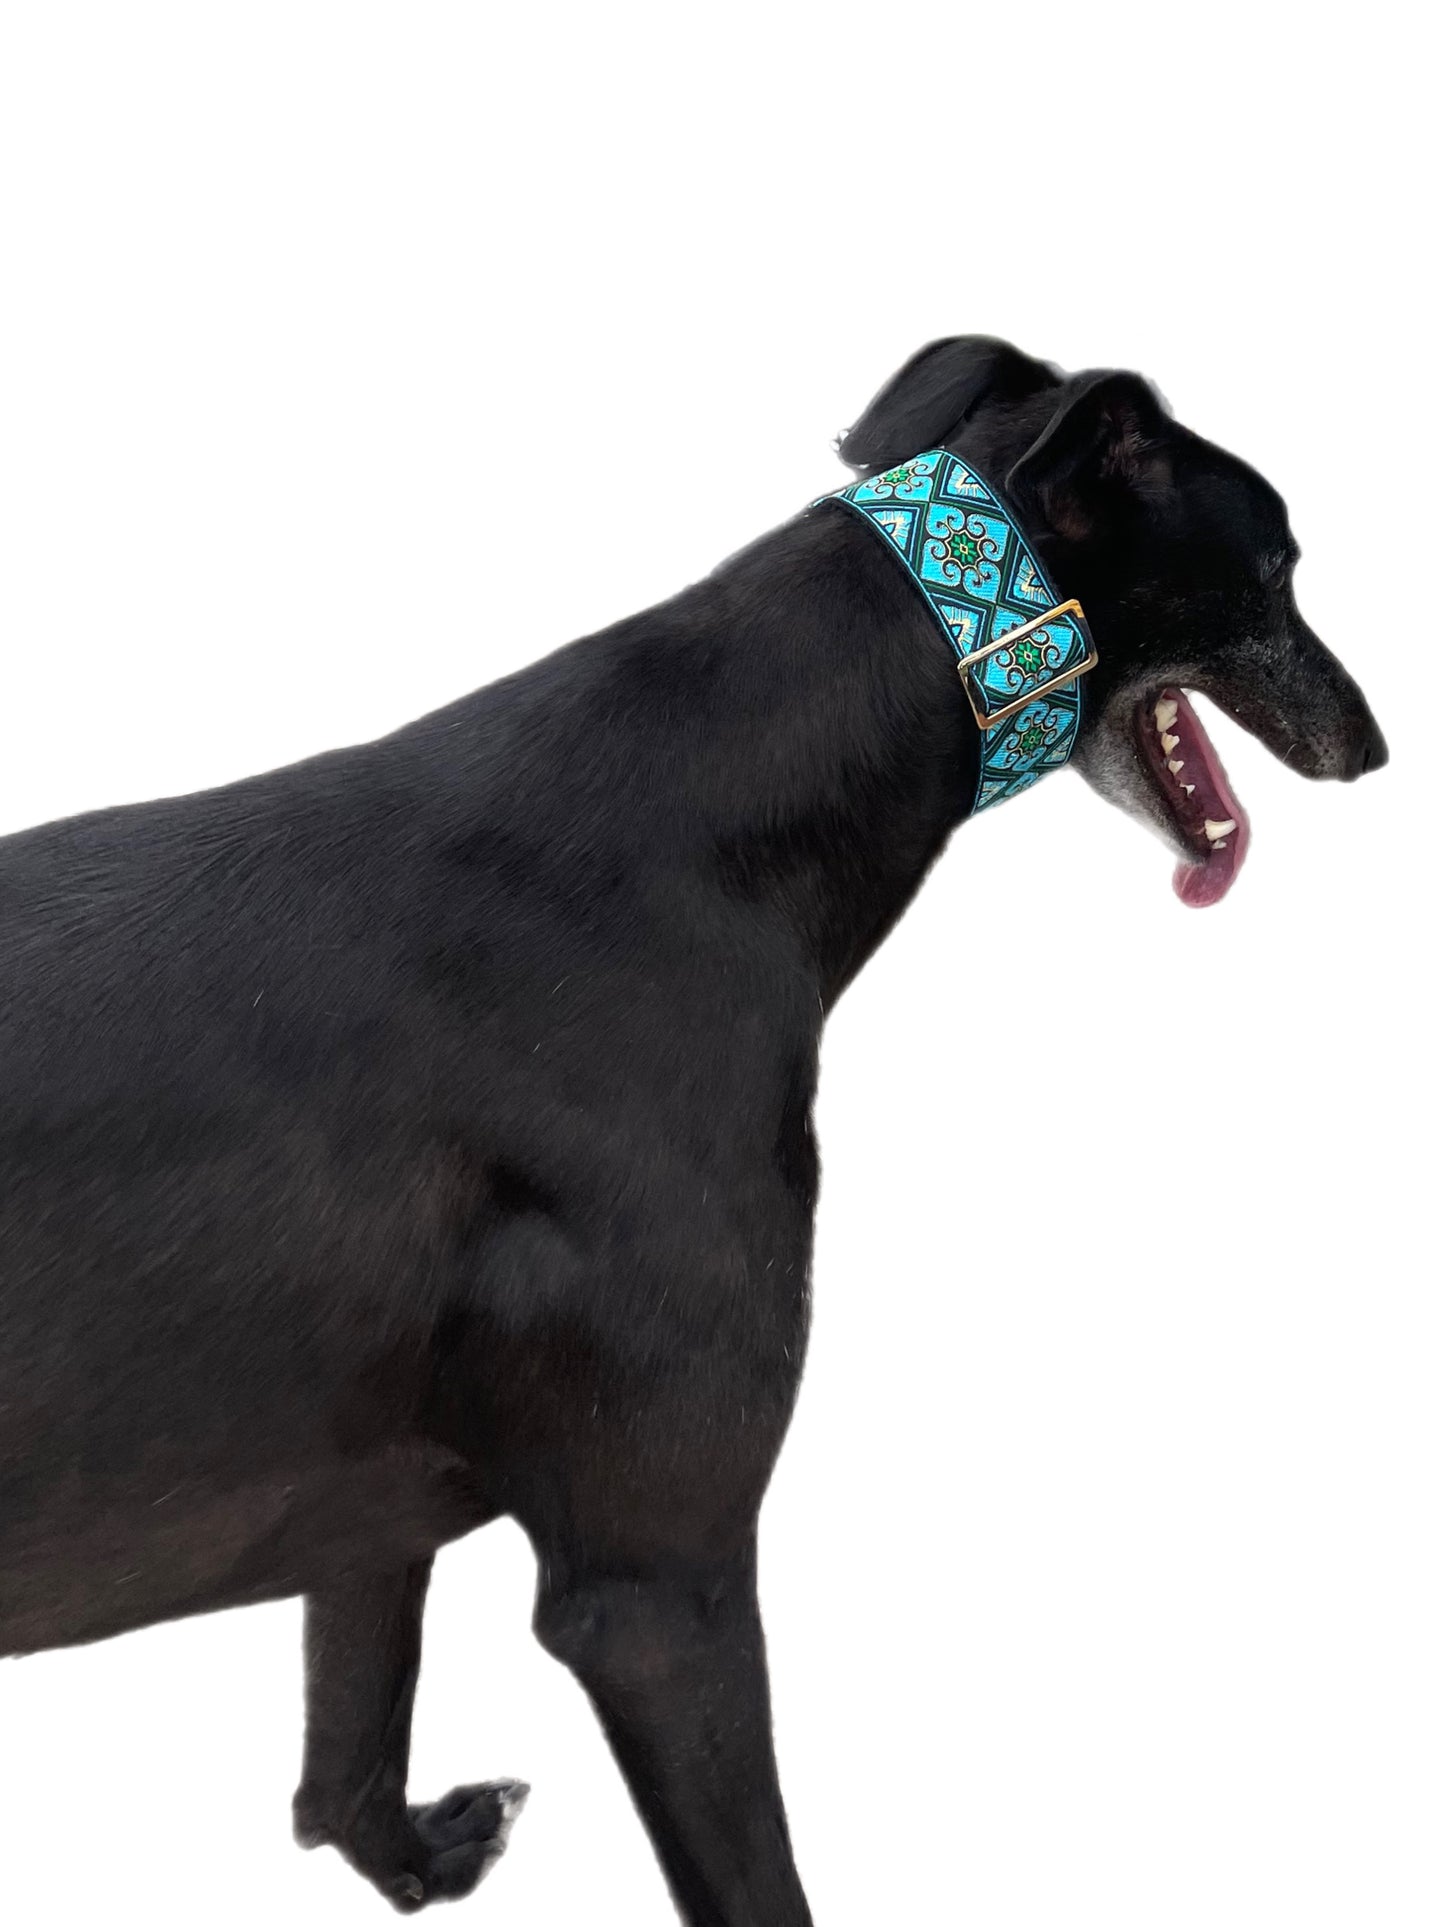 Aqua shimmer Greyhound martingale collar on black cotton webbing